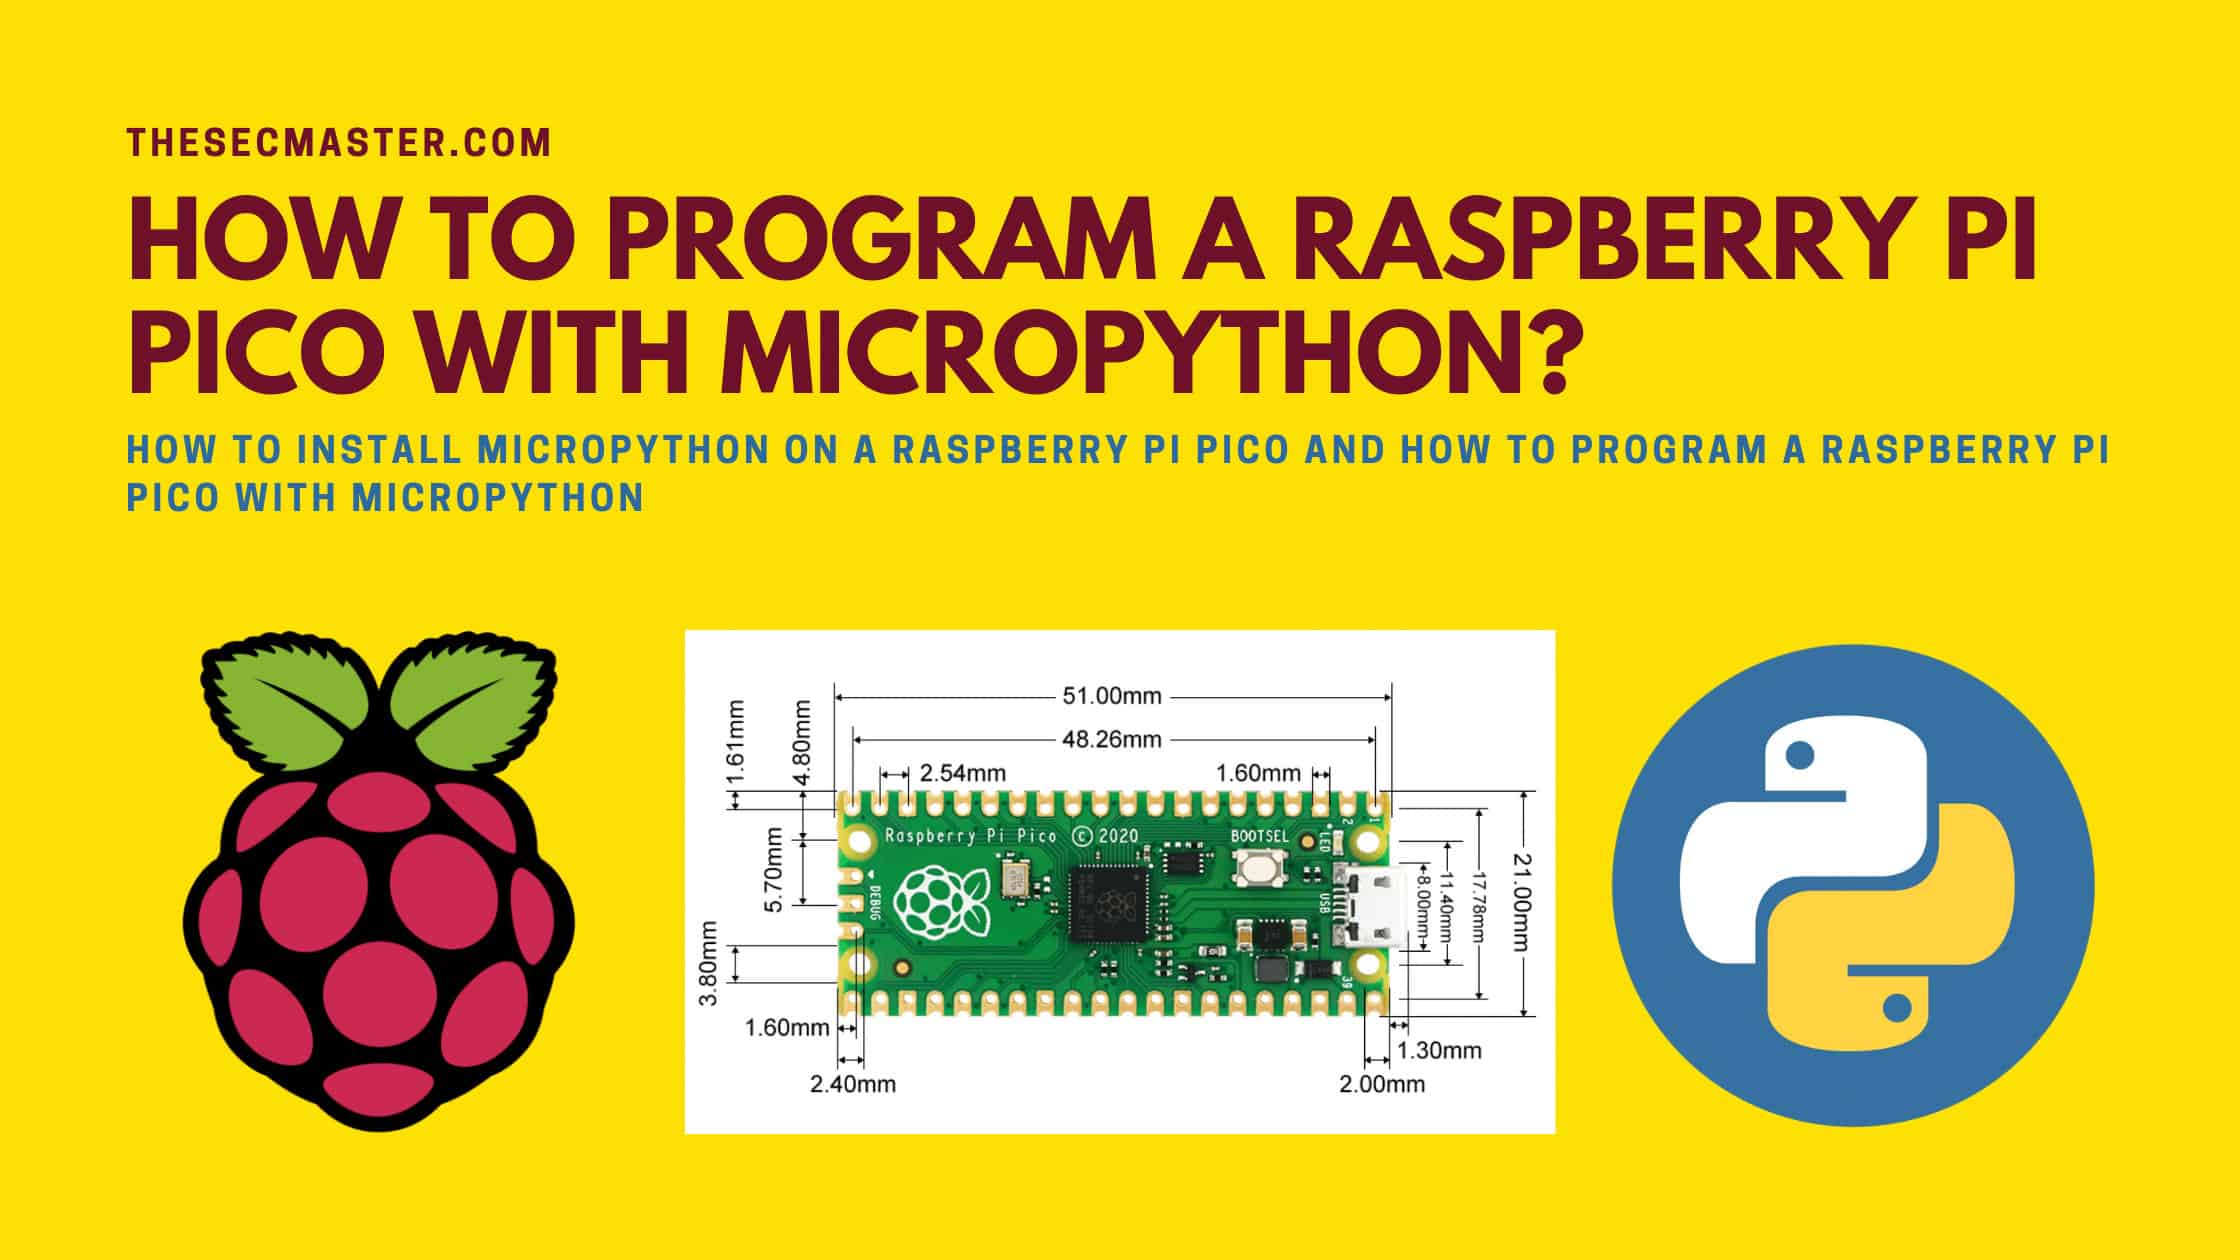 How To Install Micropython On A Raspberry Pi Pico And How To Program A Raspberry Pi Pico With Micropython